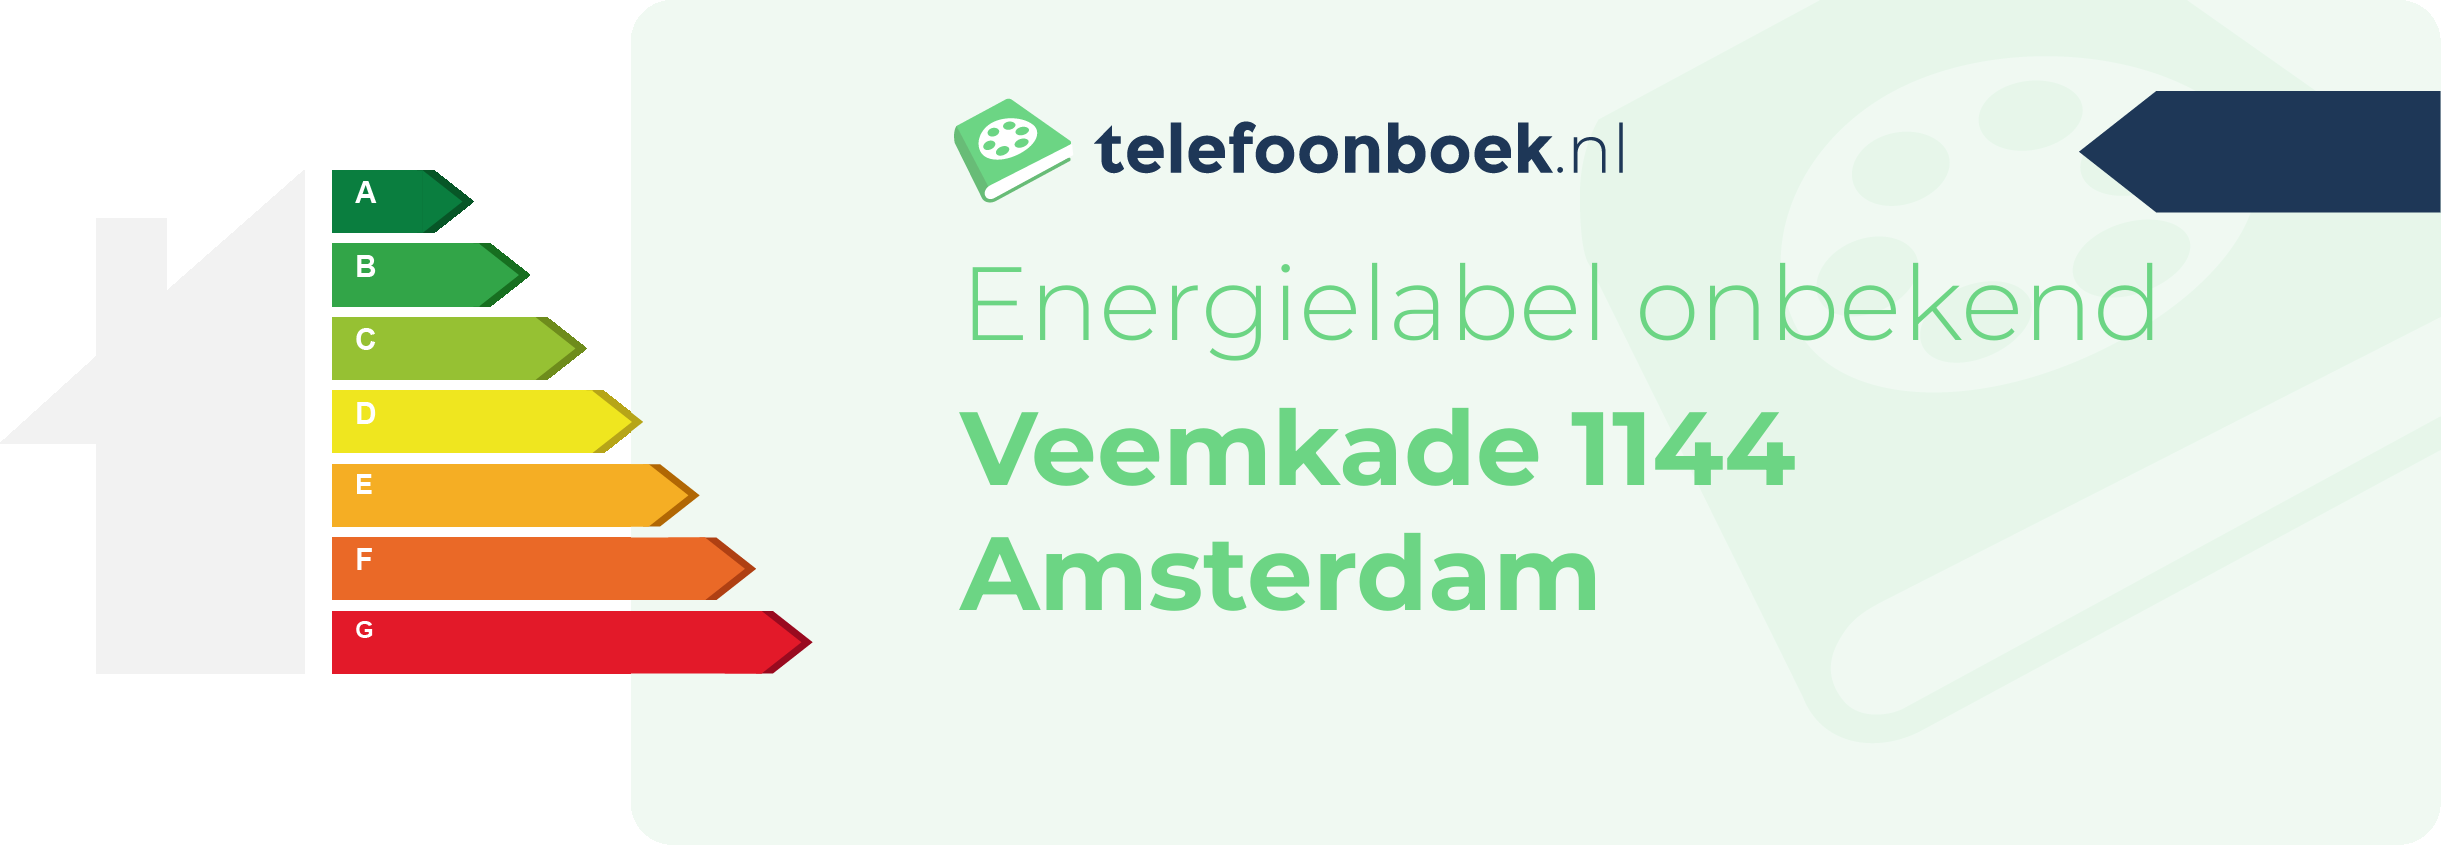 Energielabel Veemkade 1144 Amsterdam